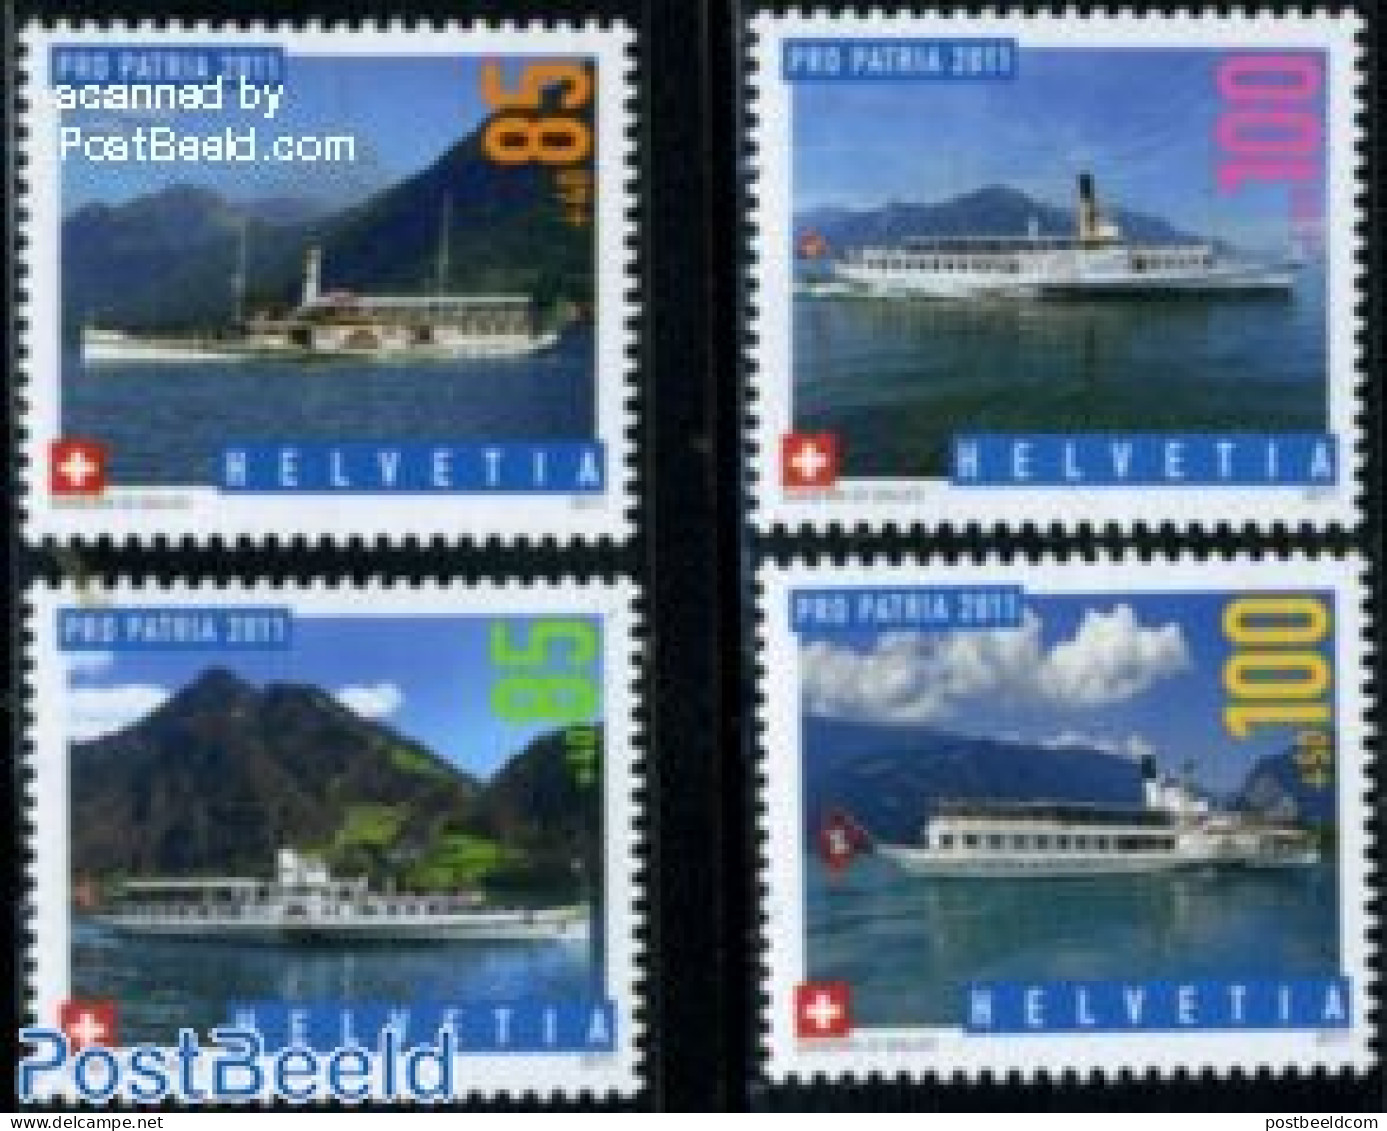 Switzerland 2011 Pro Patria, Ships 4v, Mint NH, Transport - Ships And Boats - Ungebraucht